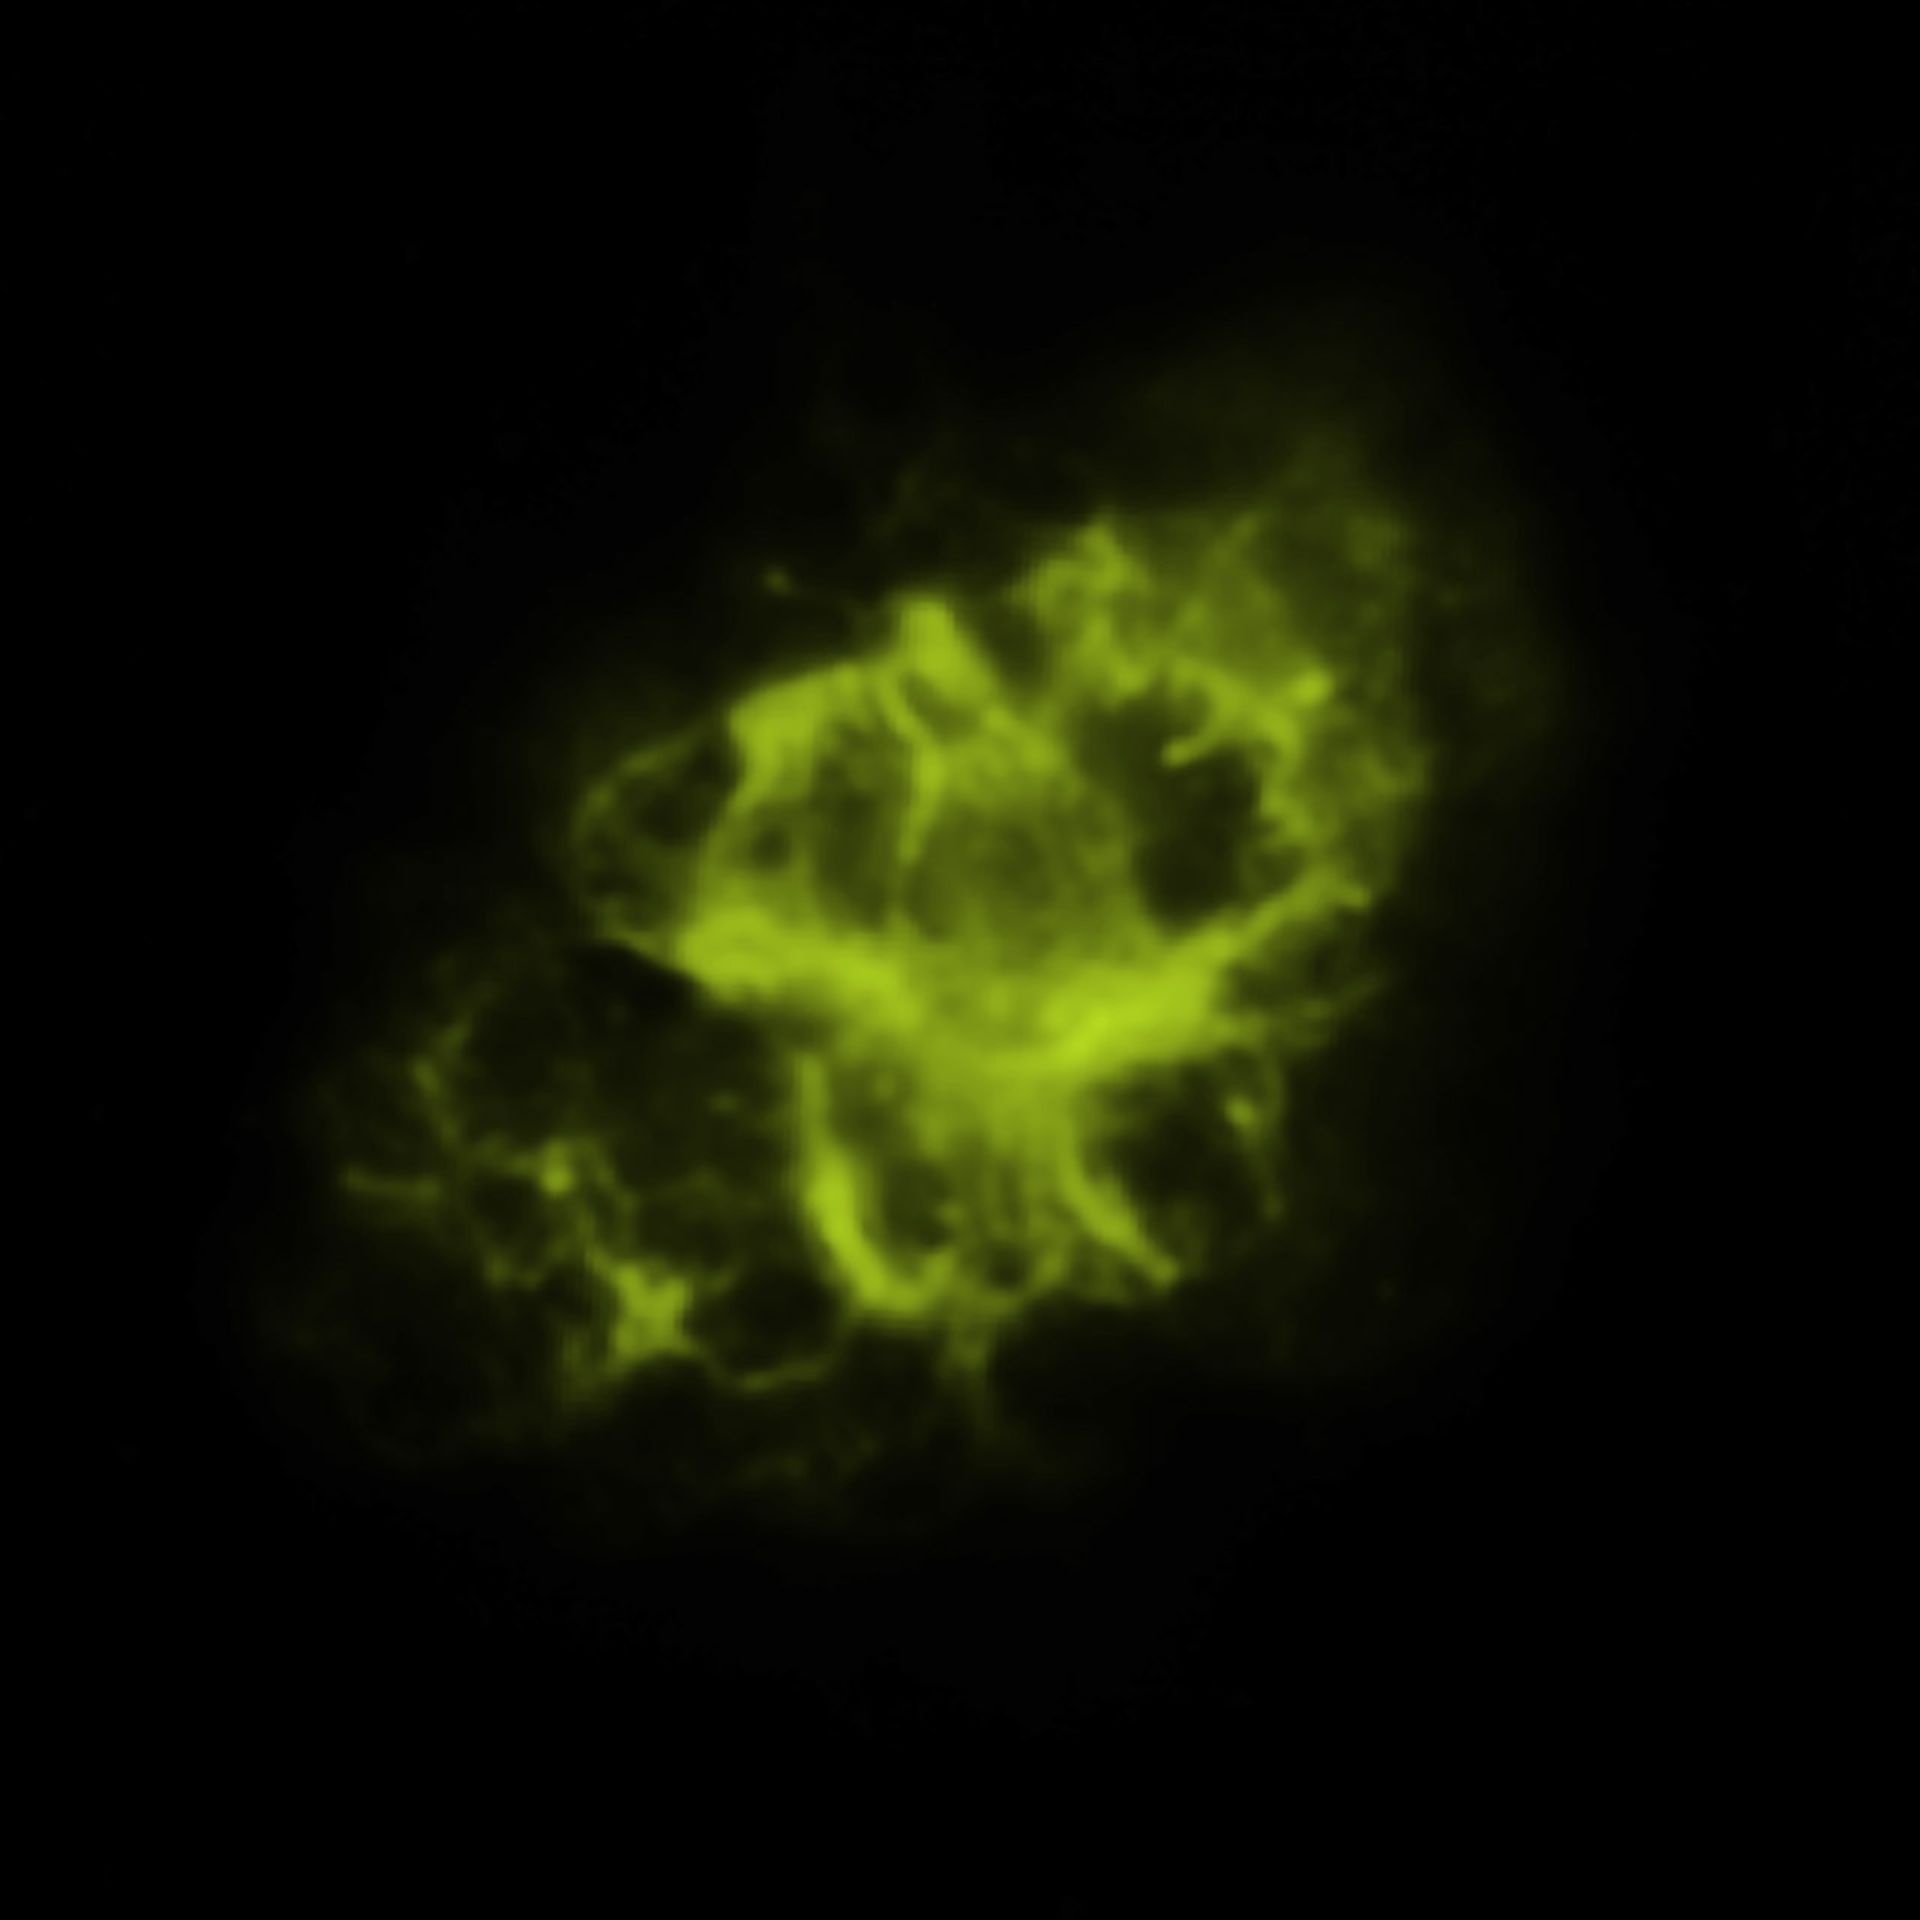 سحابی خرچنگ در نور فروسرخ (تلسکوپ فضایی اسپیتزر)